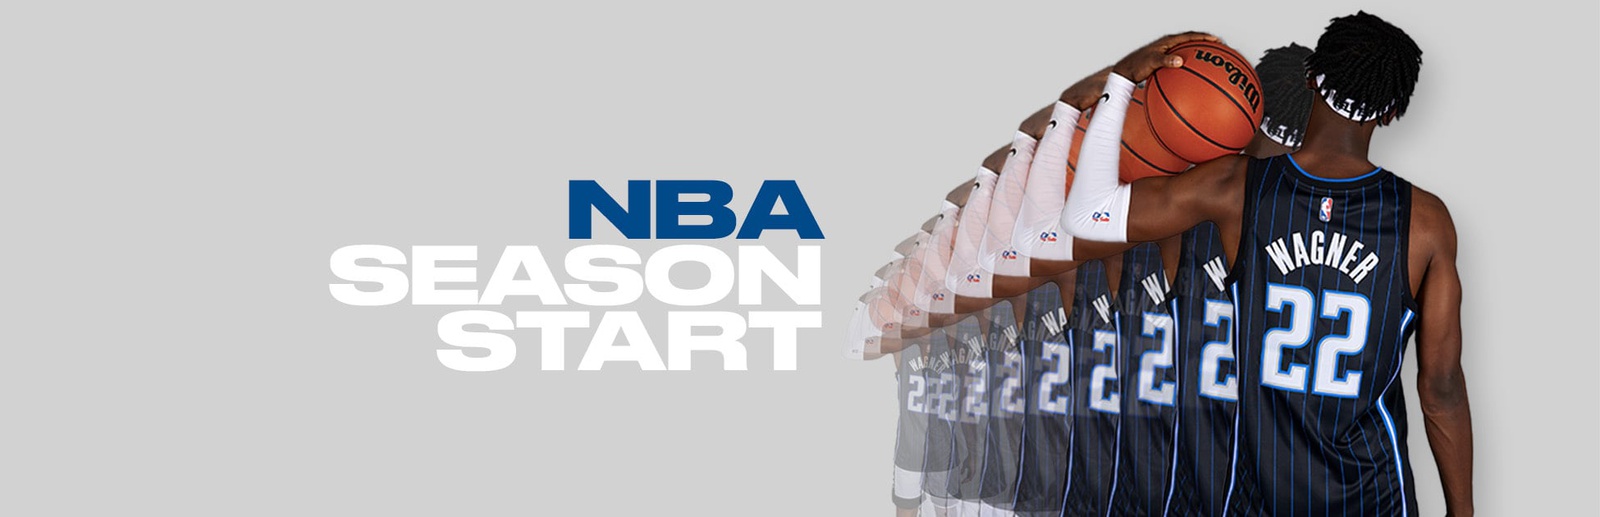 UNBOXING: Kevin Durant Brooklyn Nets Authentic Jordan NBA Jersey